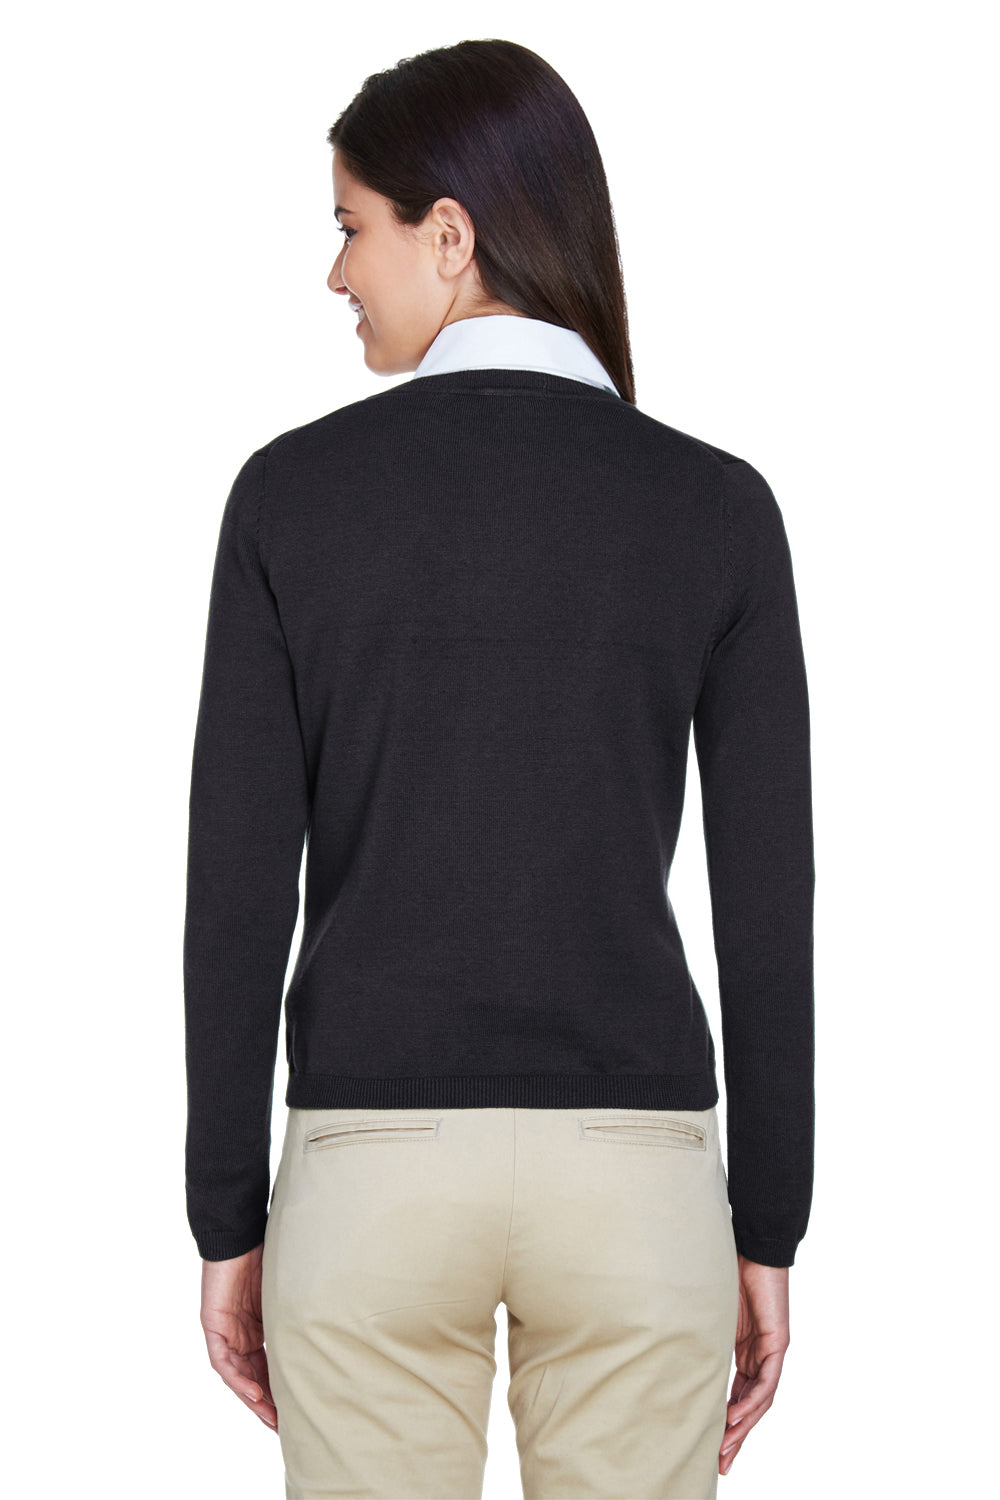 Devon & Jones D475W Womens Wrinkle Resistant V-Neck Sweater Black Back